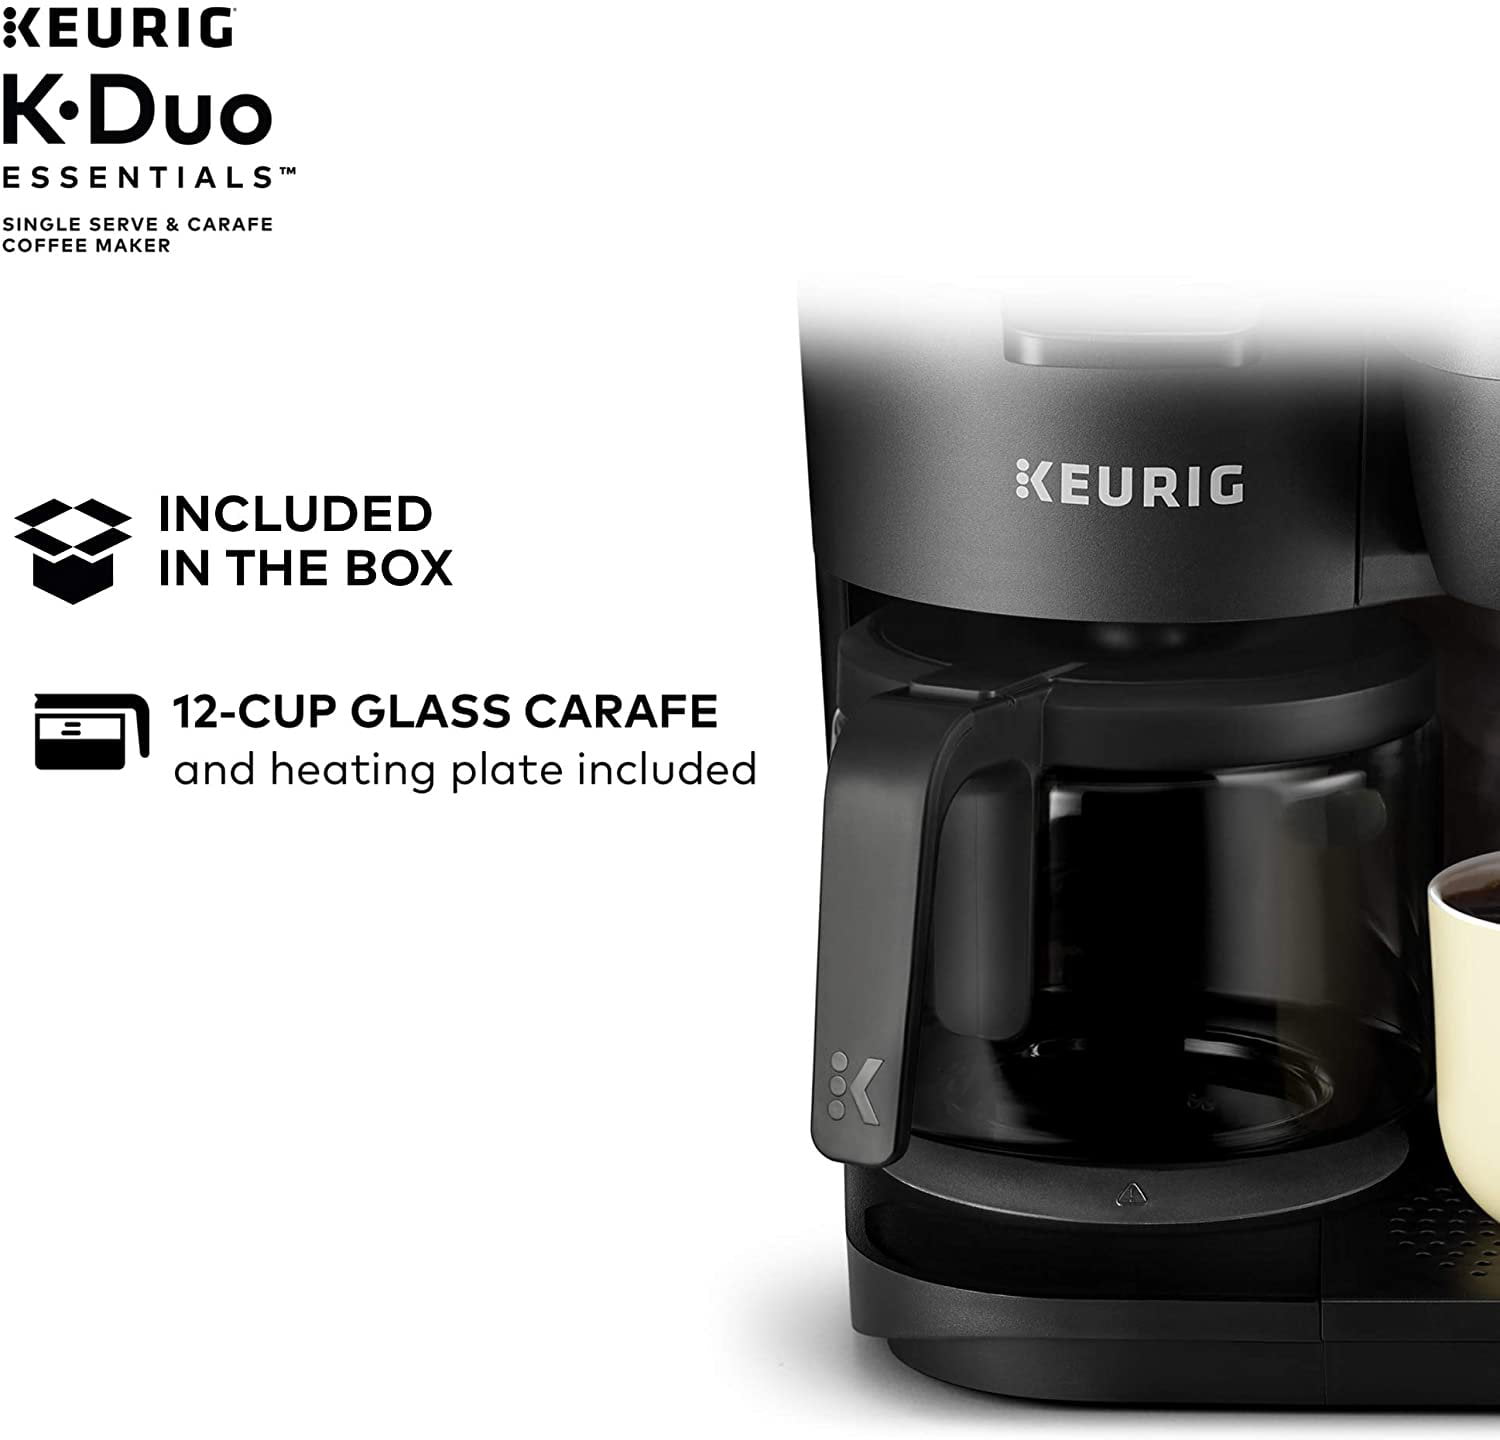 Keurig® K-Duo™ Single Serve & Carafe Coffee Maker - Black, 1 ct - Ralphs